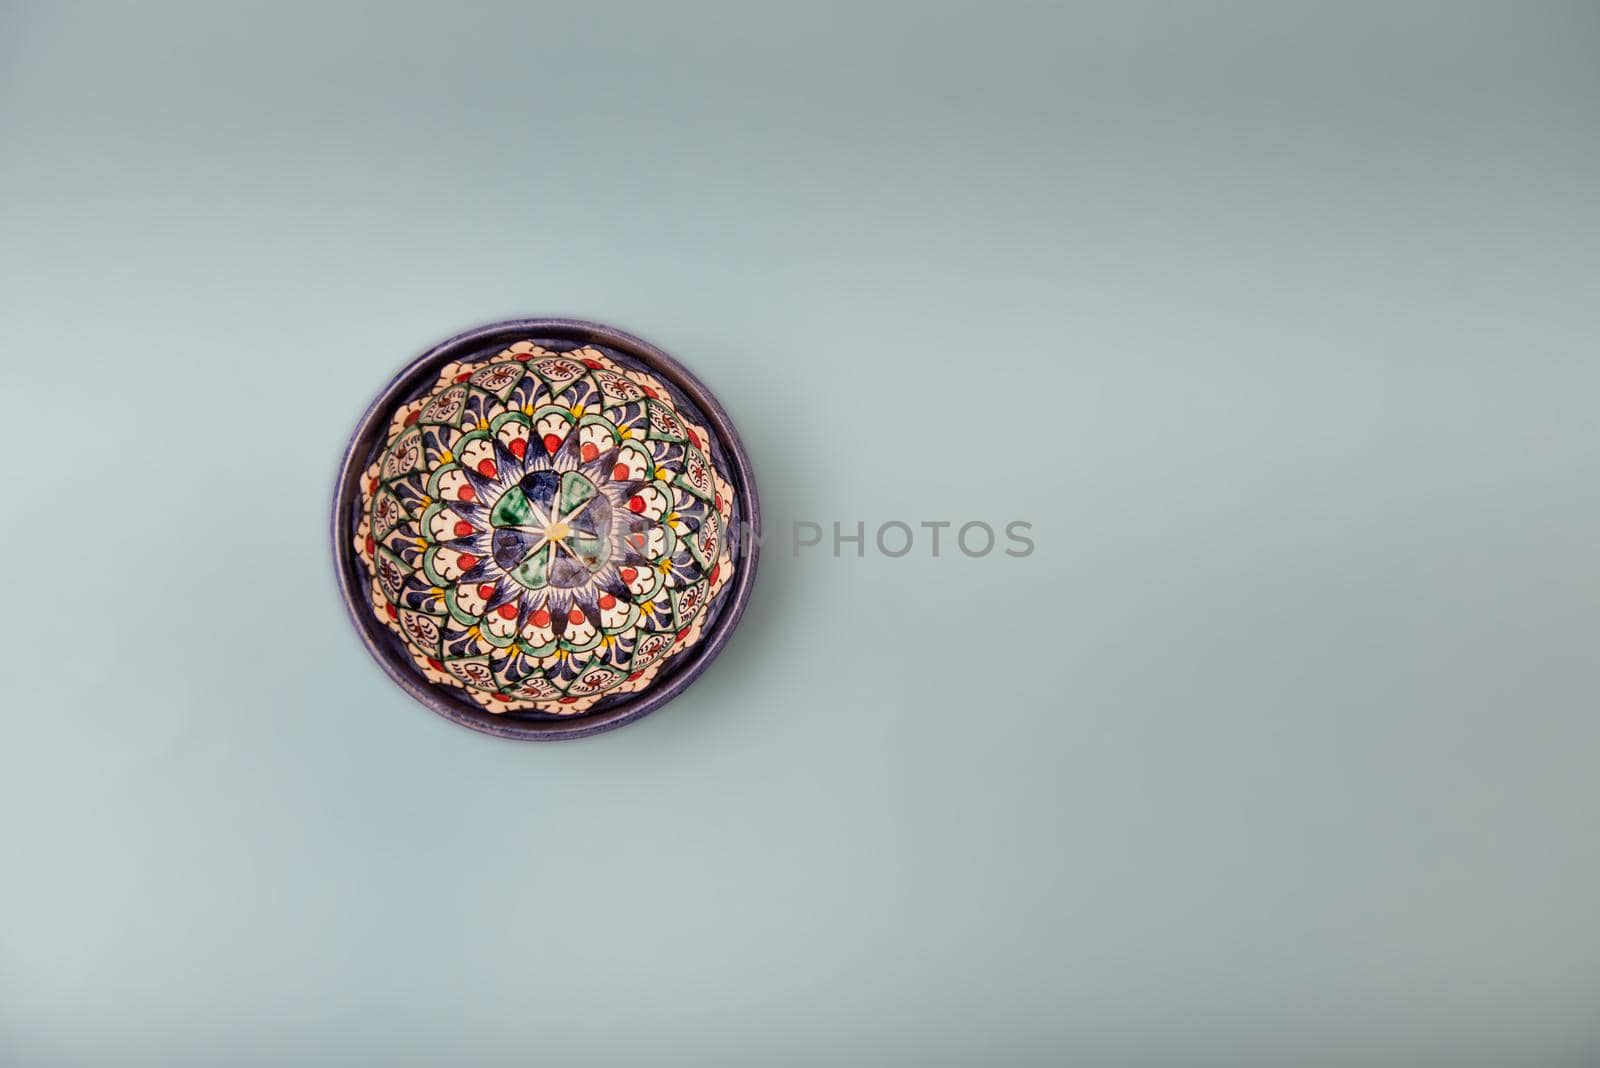 Ethnic Uzbek ceramic tableware on the gray background. Decorative ceramic cup with traditional uzbekistan ornament.